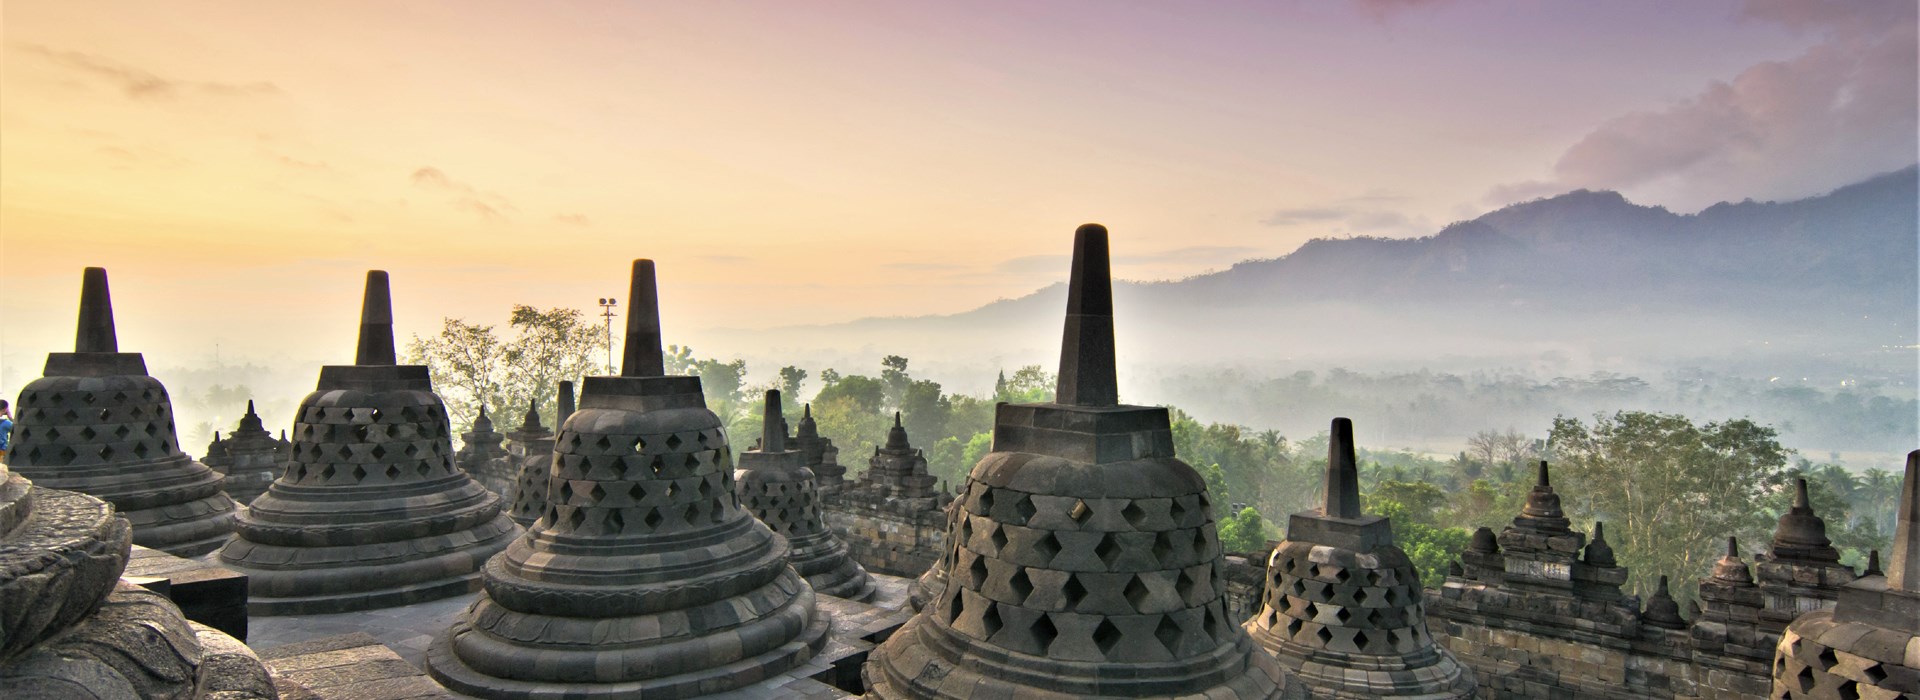 Visiter Le temple de Borobudur - Indonesie